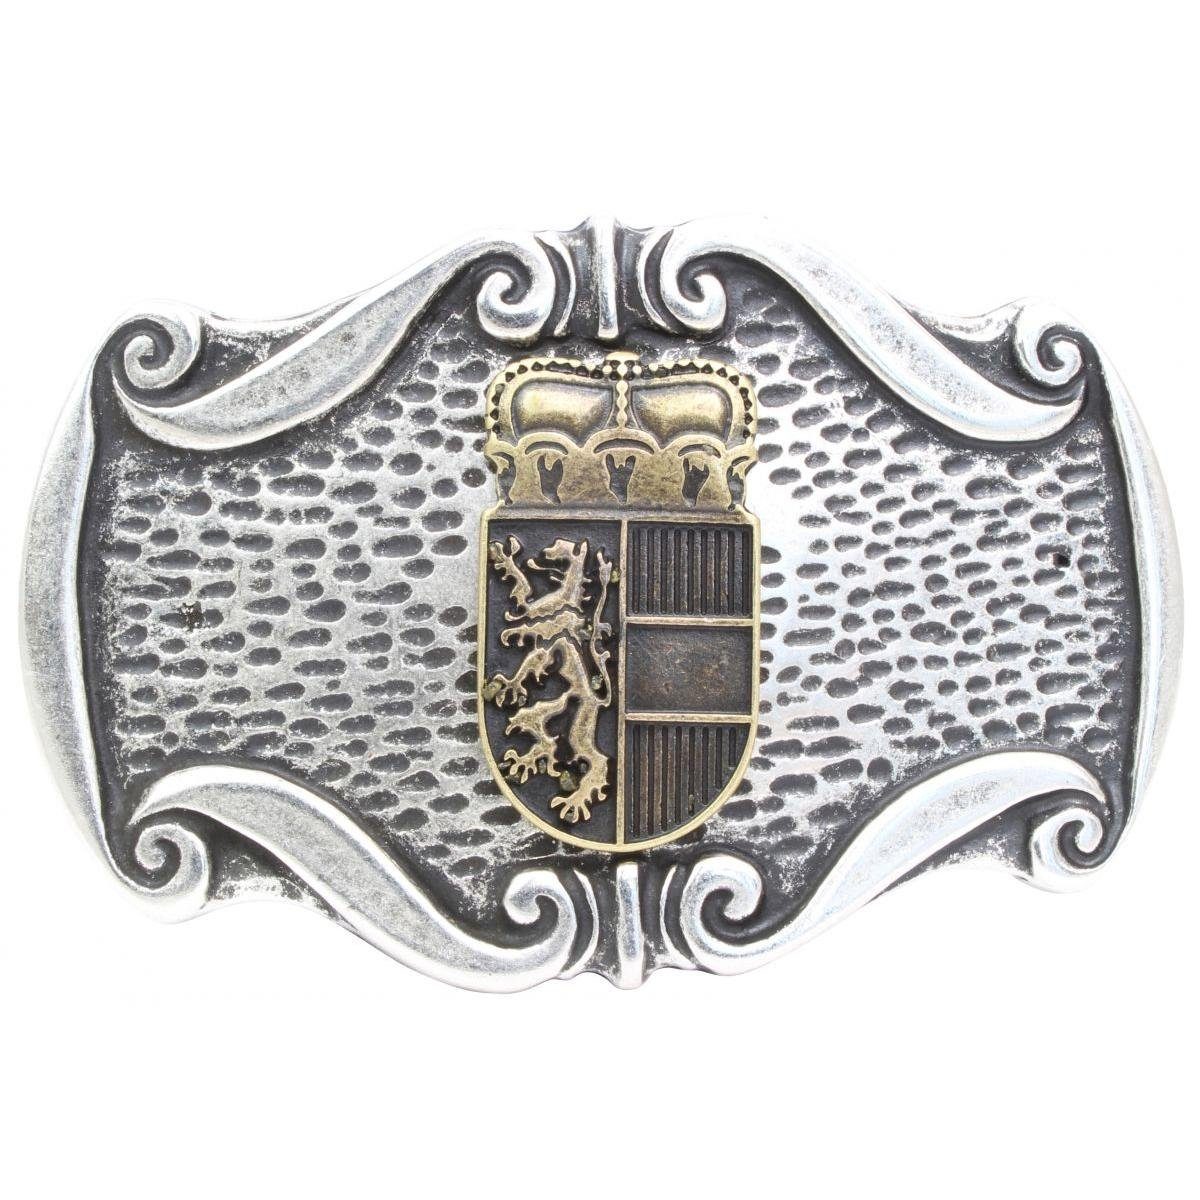 BELTINGER Gürtelschnalle Wappen Salzburg 4,0 Gürtelschließe - - Buckle cm Wechselschließe s/g 40mm bicolor